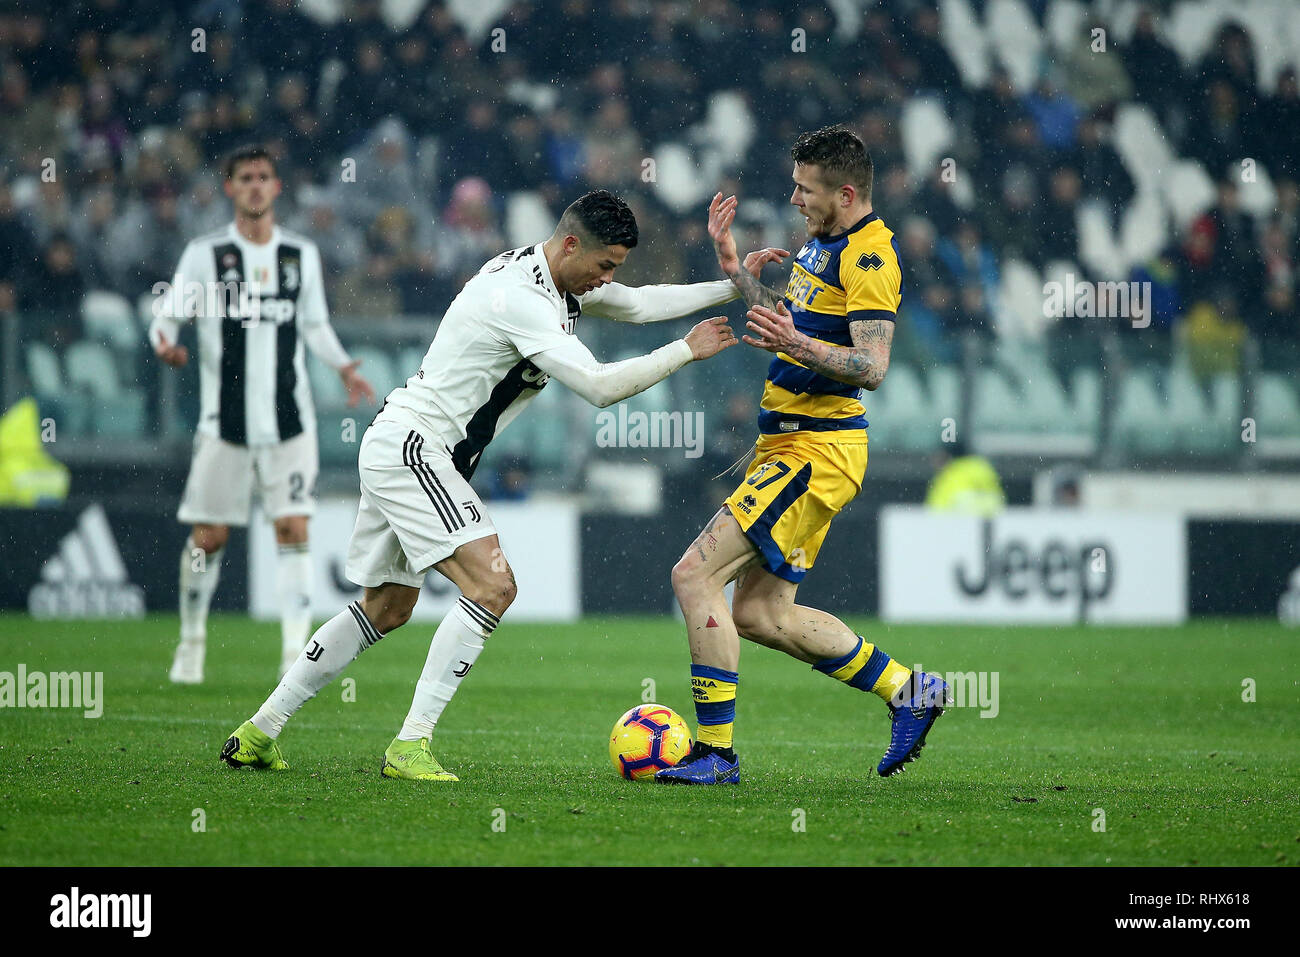 Juventus vs parma